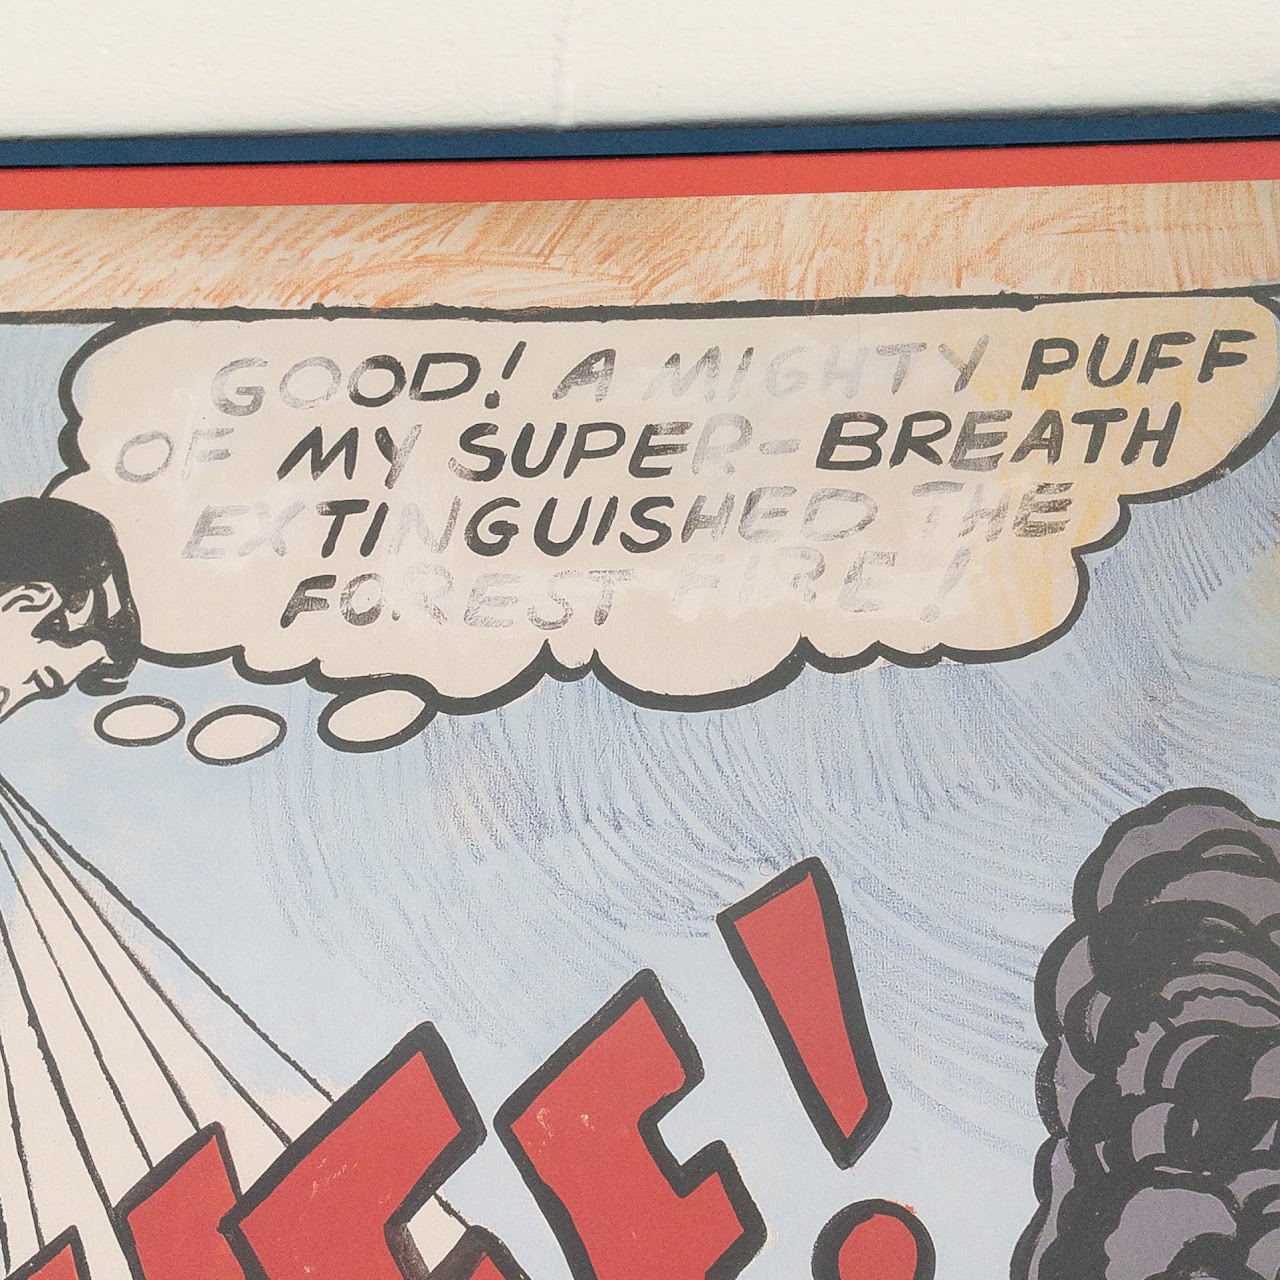 Andy Warhol: A Retrospective MoMA 'Superman' Exhibition Poster